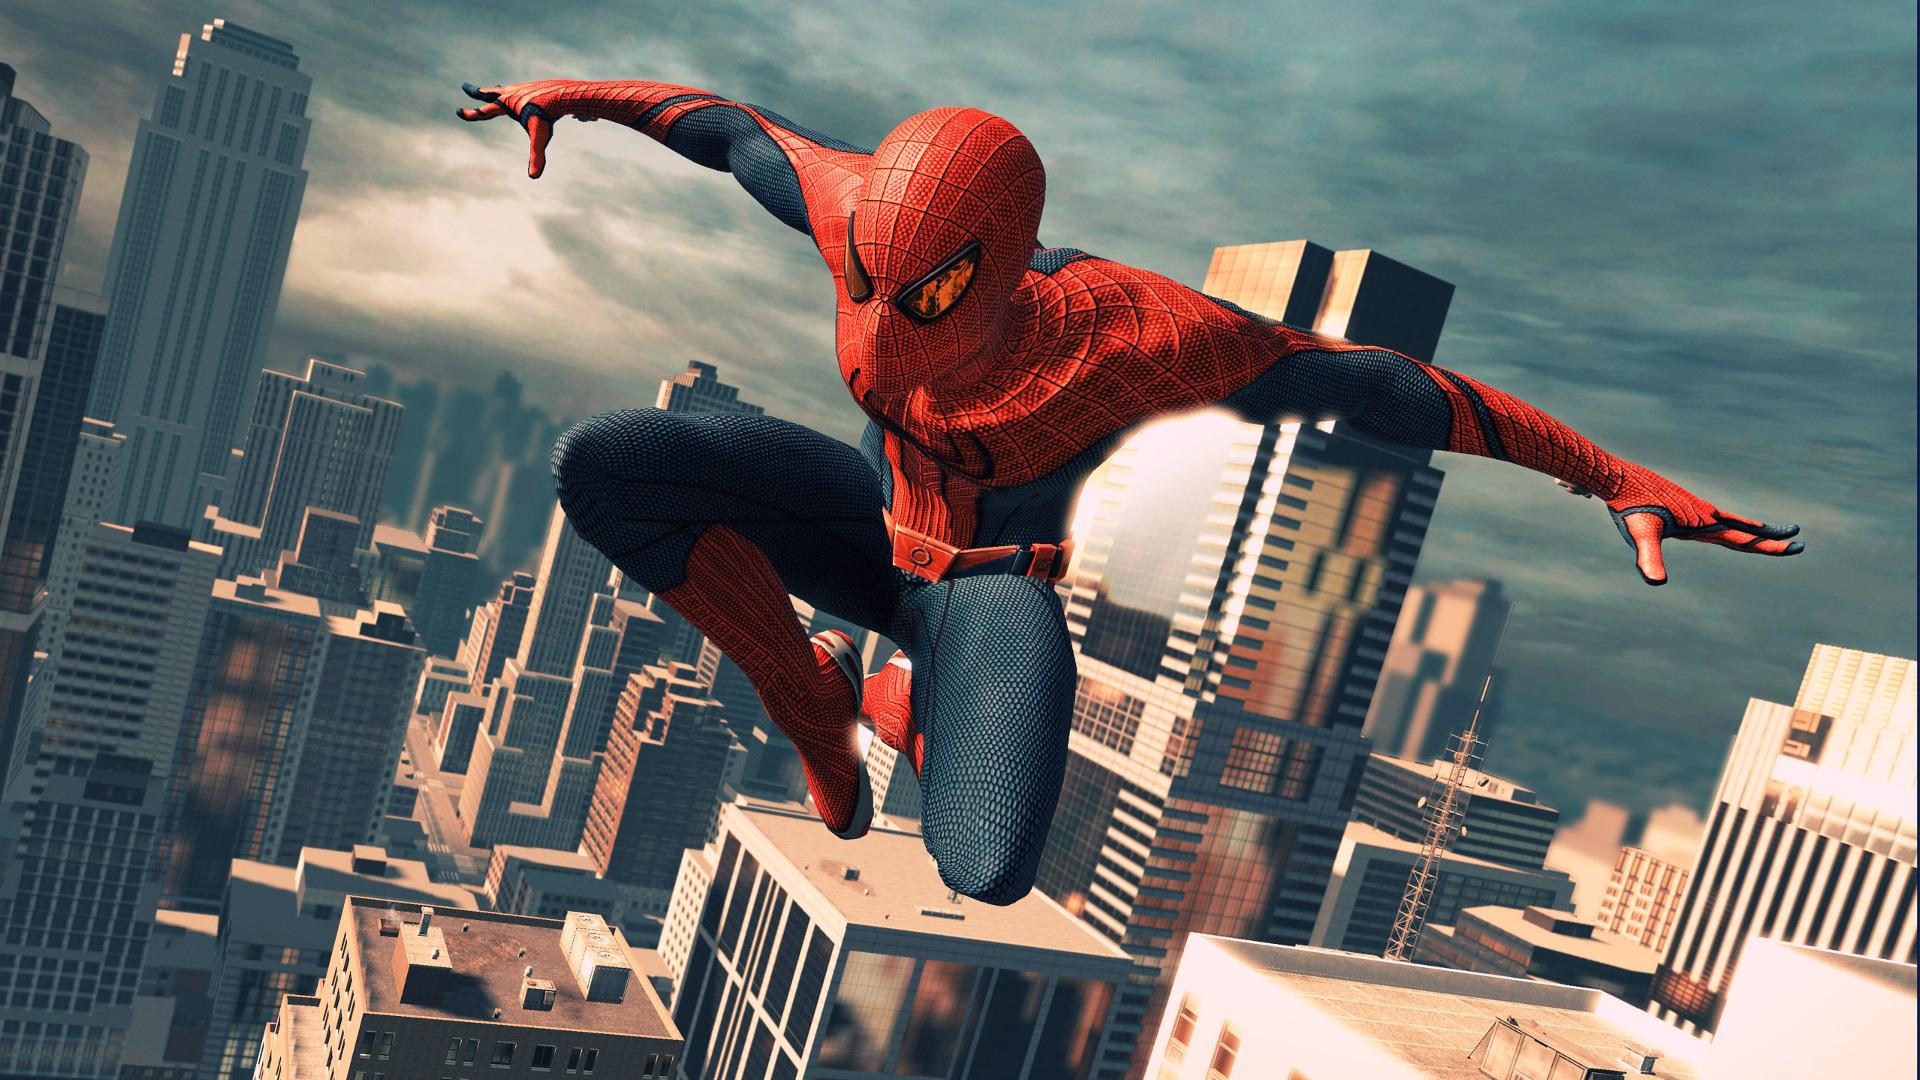 THE AMAZING SPIDER-MAN Spiderman jumping wallpaper Wallpaper